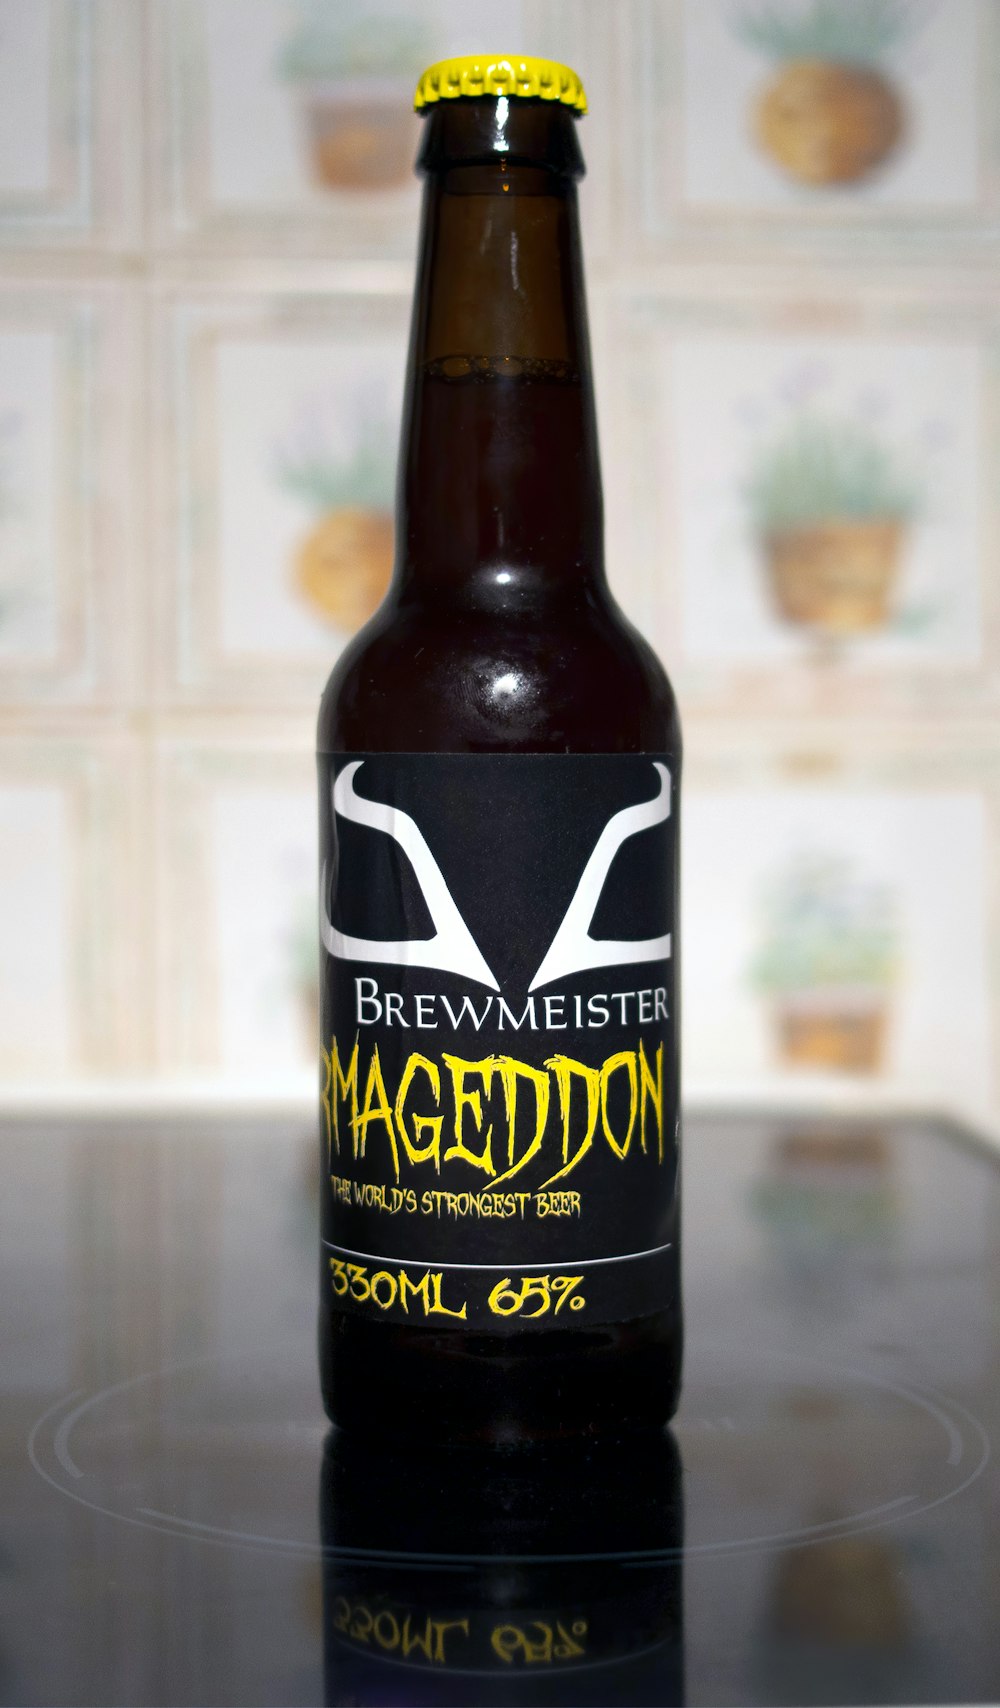 standing Brewmeister Mageddon bottle